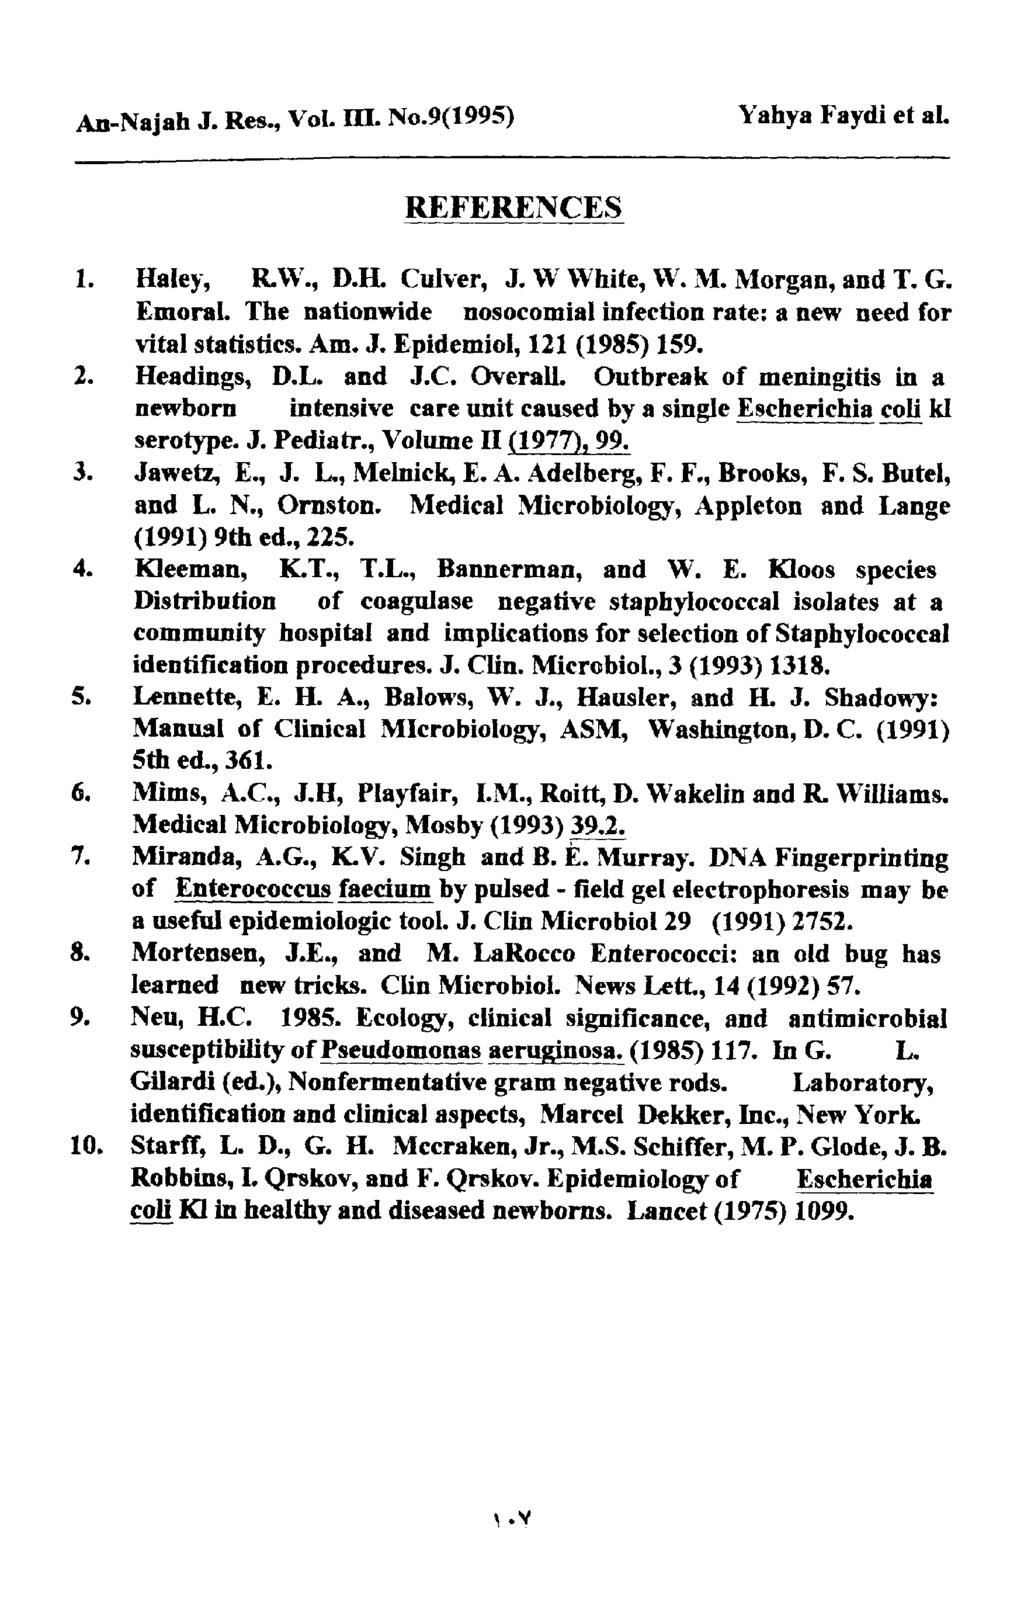 An-Najah J. Res., Vol. HI. No.9(1995) Yahya Faydi et al. REFERENCES 1. Haley-, R.W., D.H. Culver, J. W White, W. M. Morgan, and T. G. Emoral.